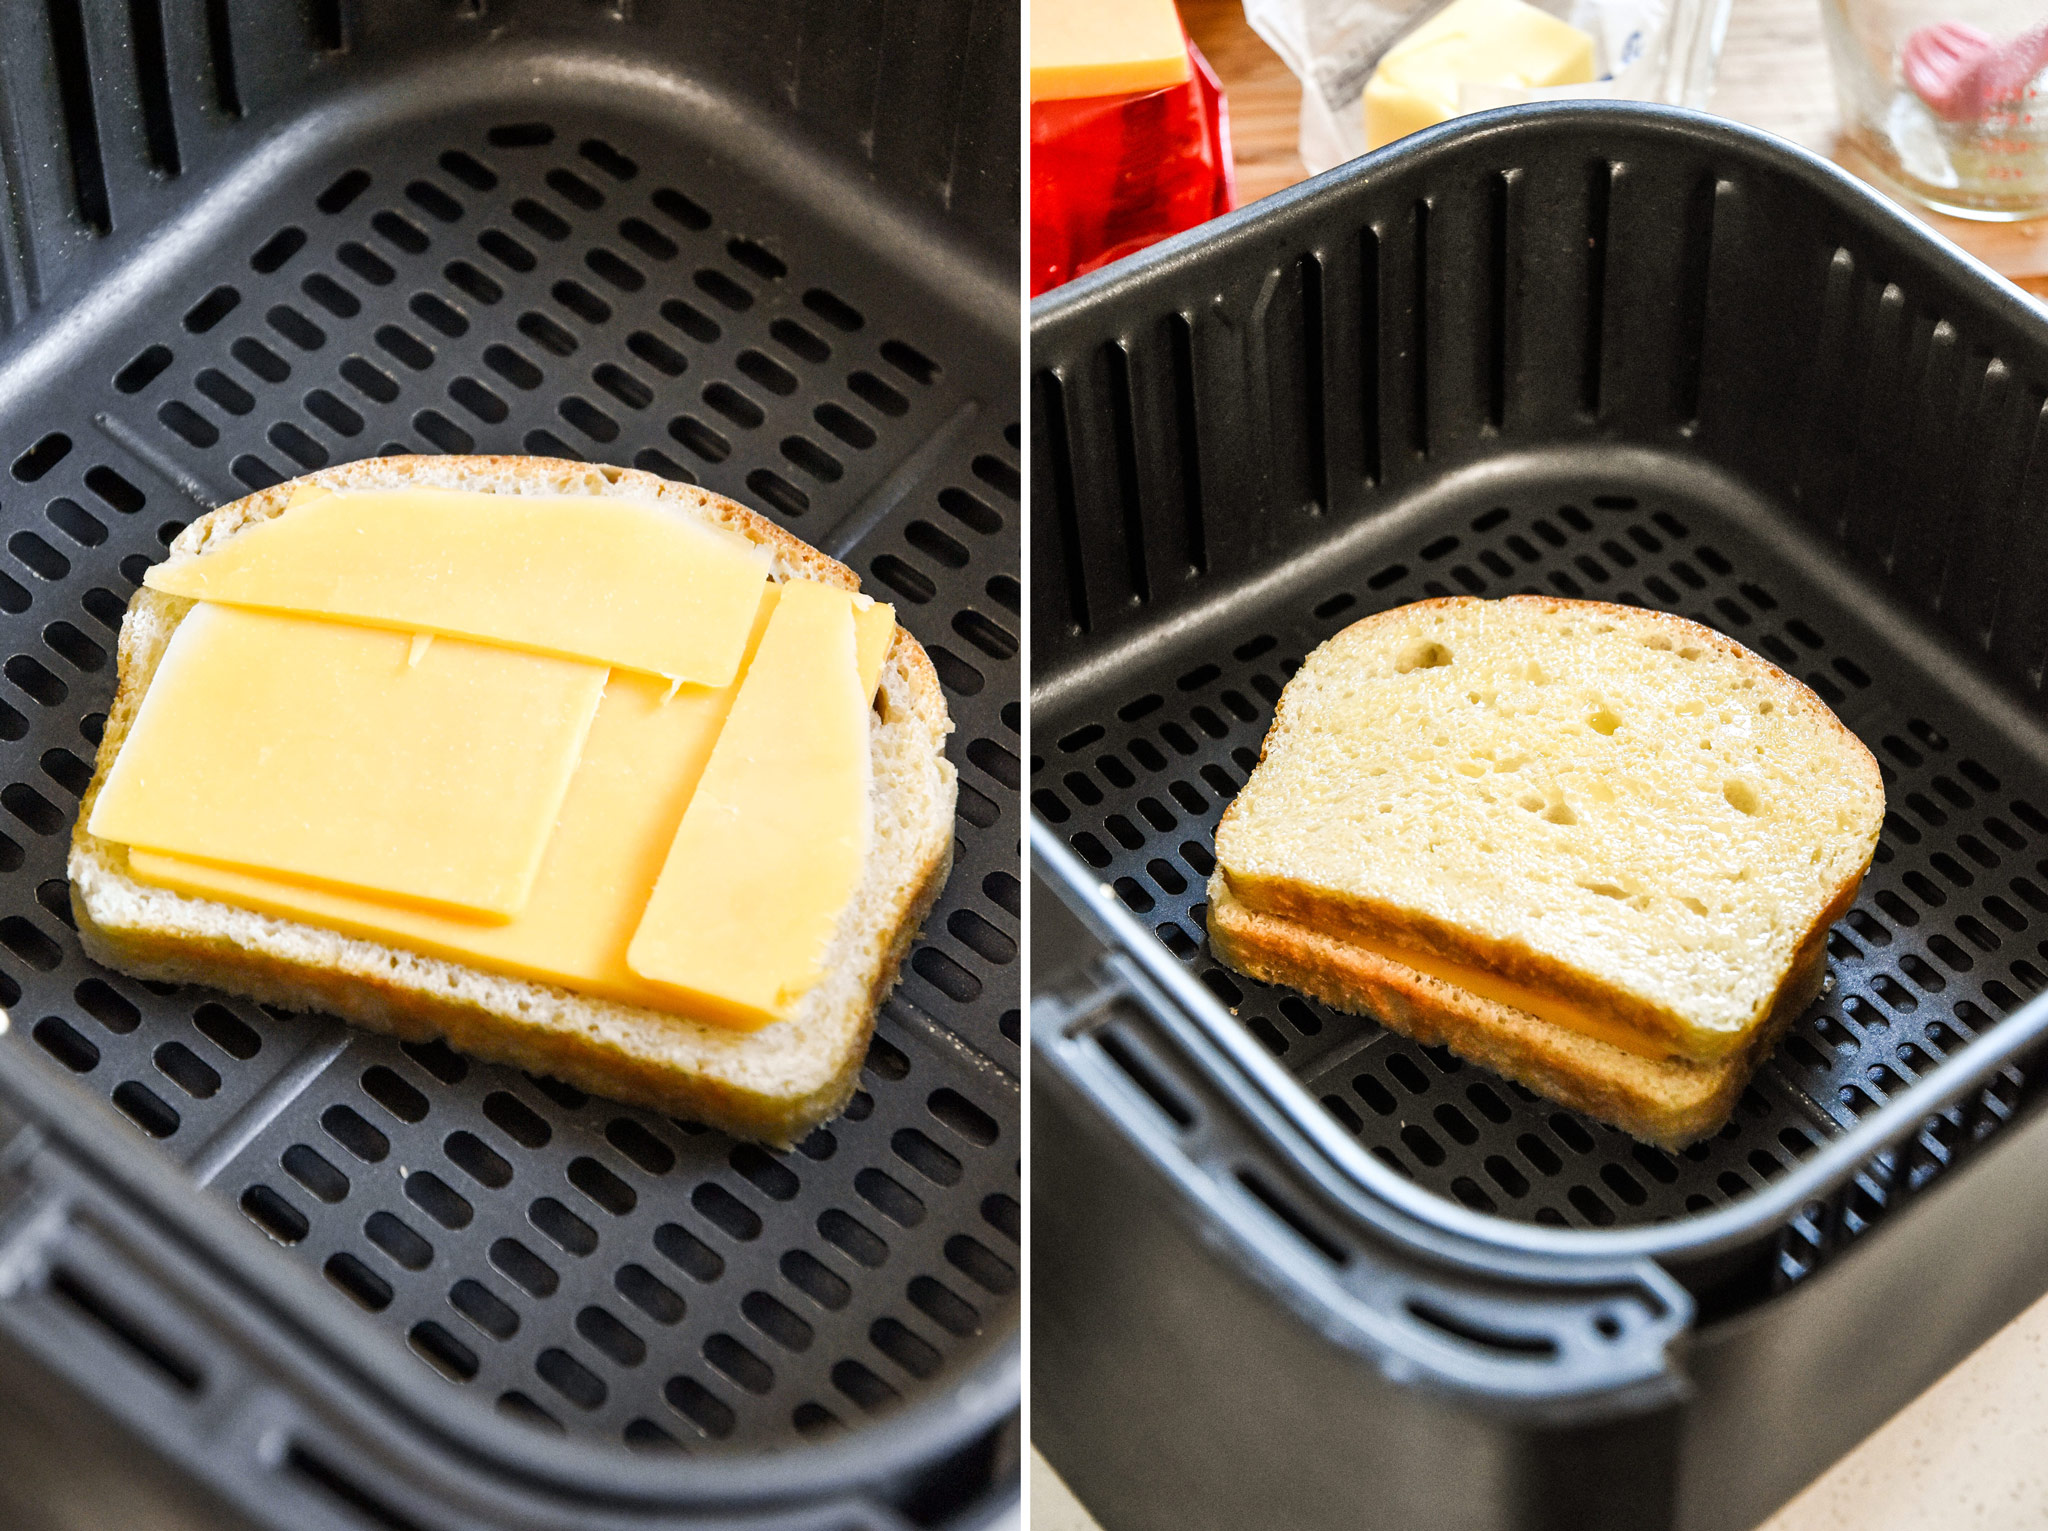 assembling a grilled cheese sandwich in an air fryer